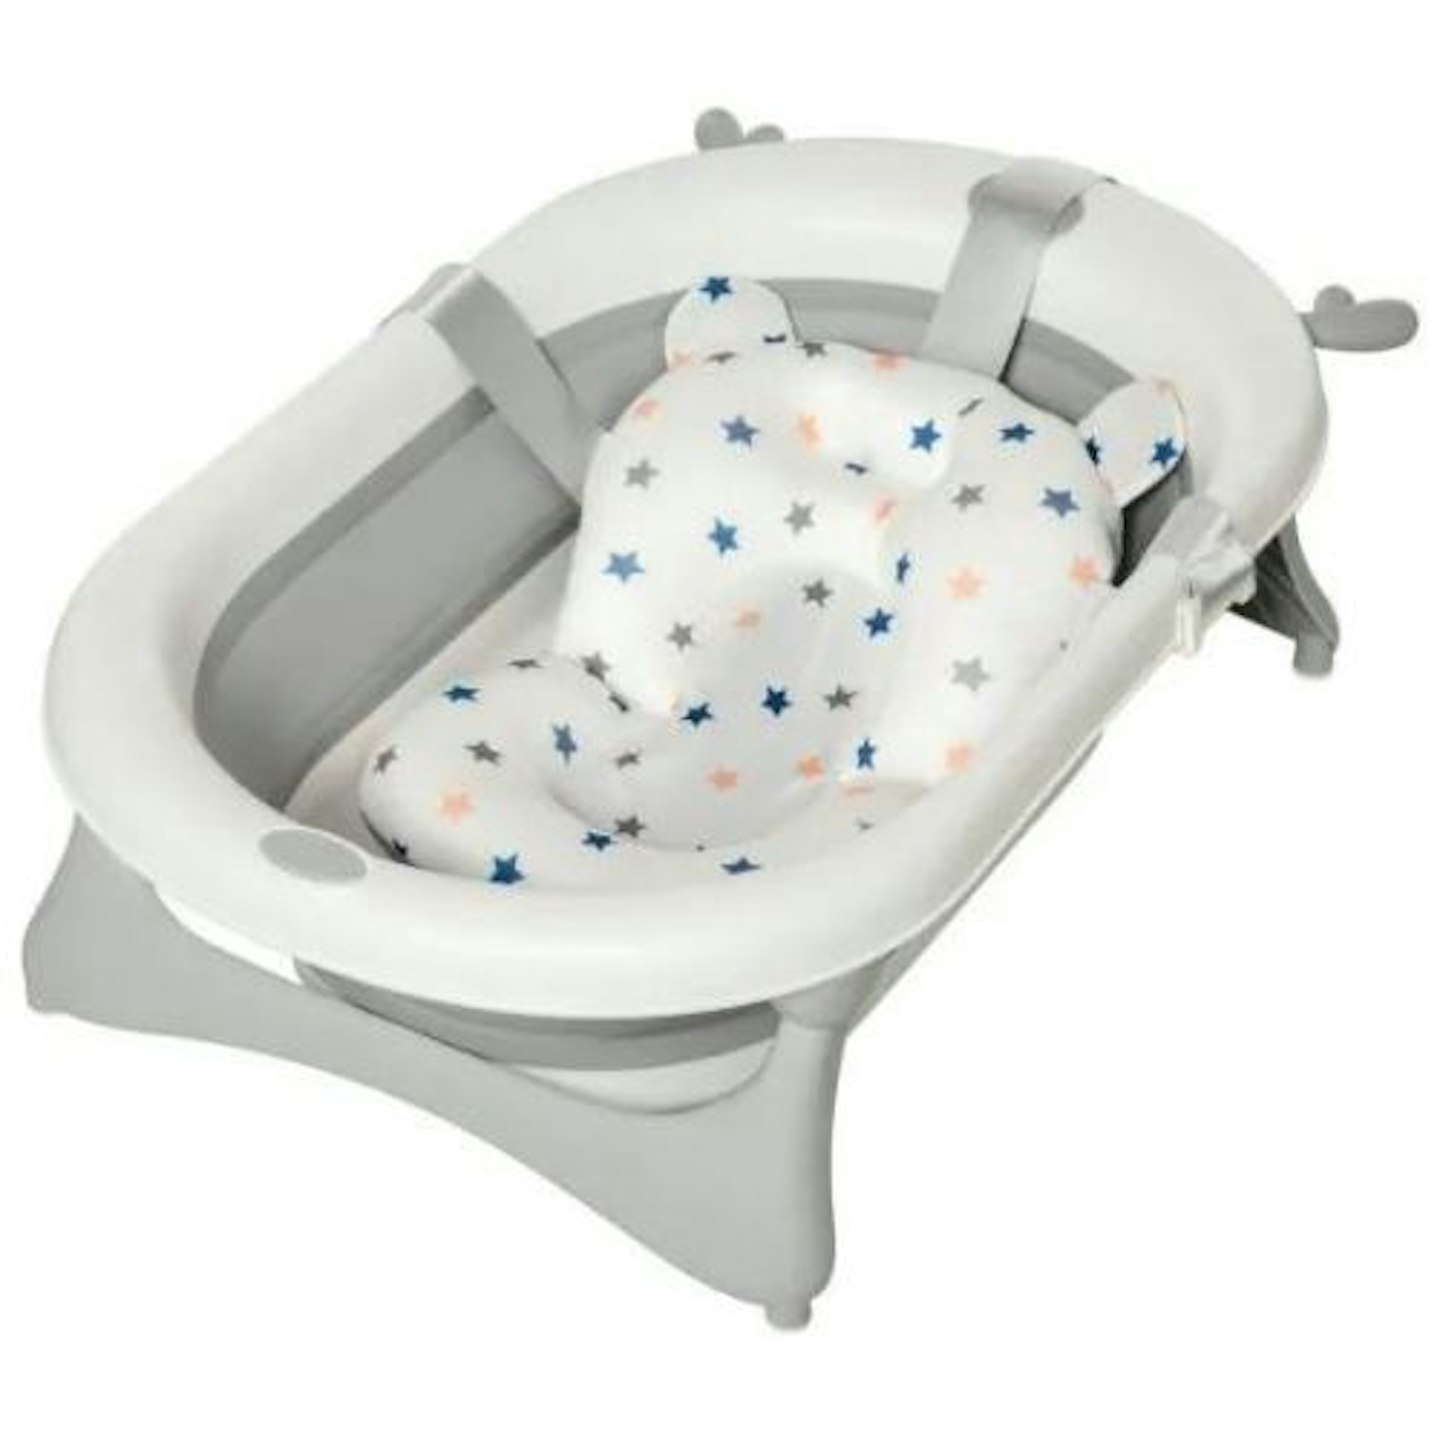 HOMCOM Folding Baby Bath Tub Ergonomic With Water Temperature Detection Plug